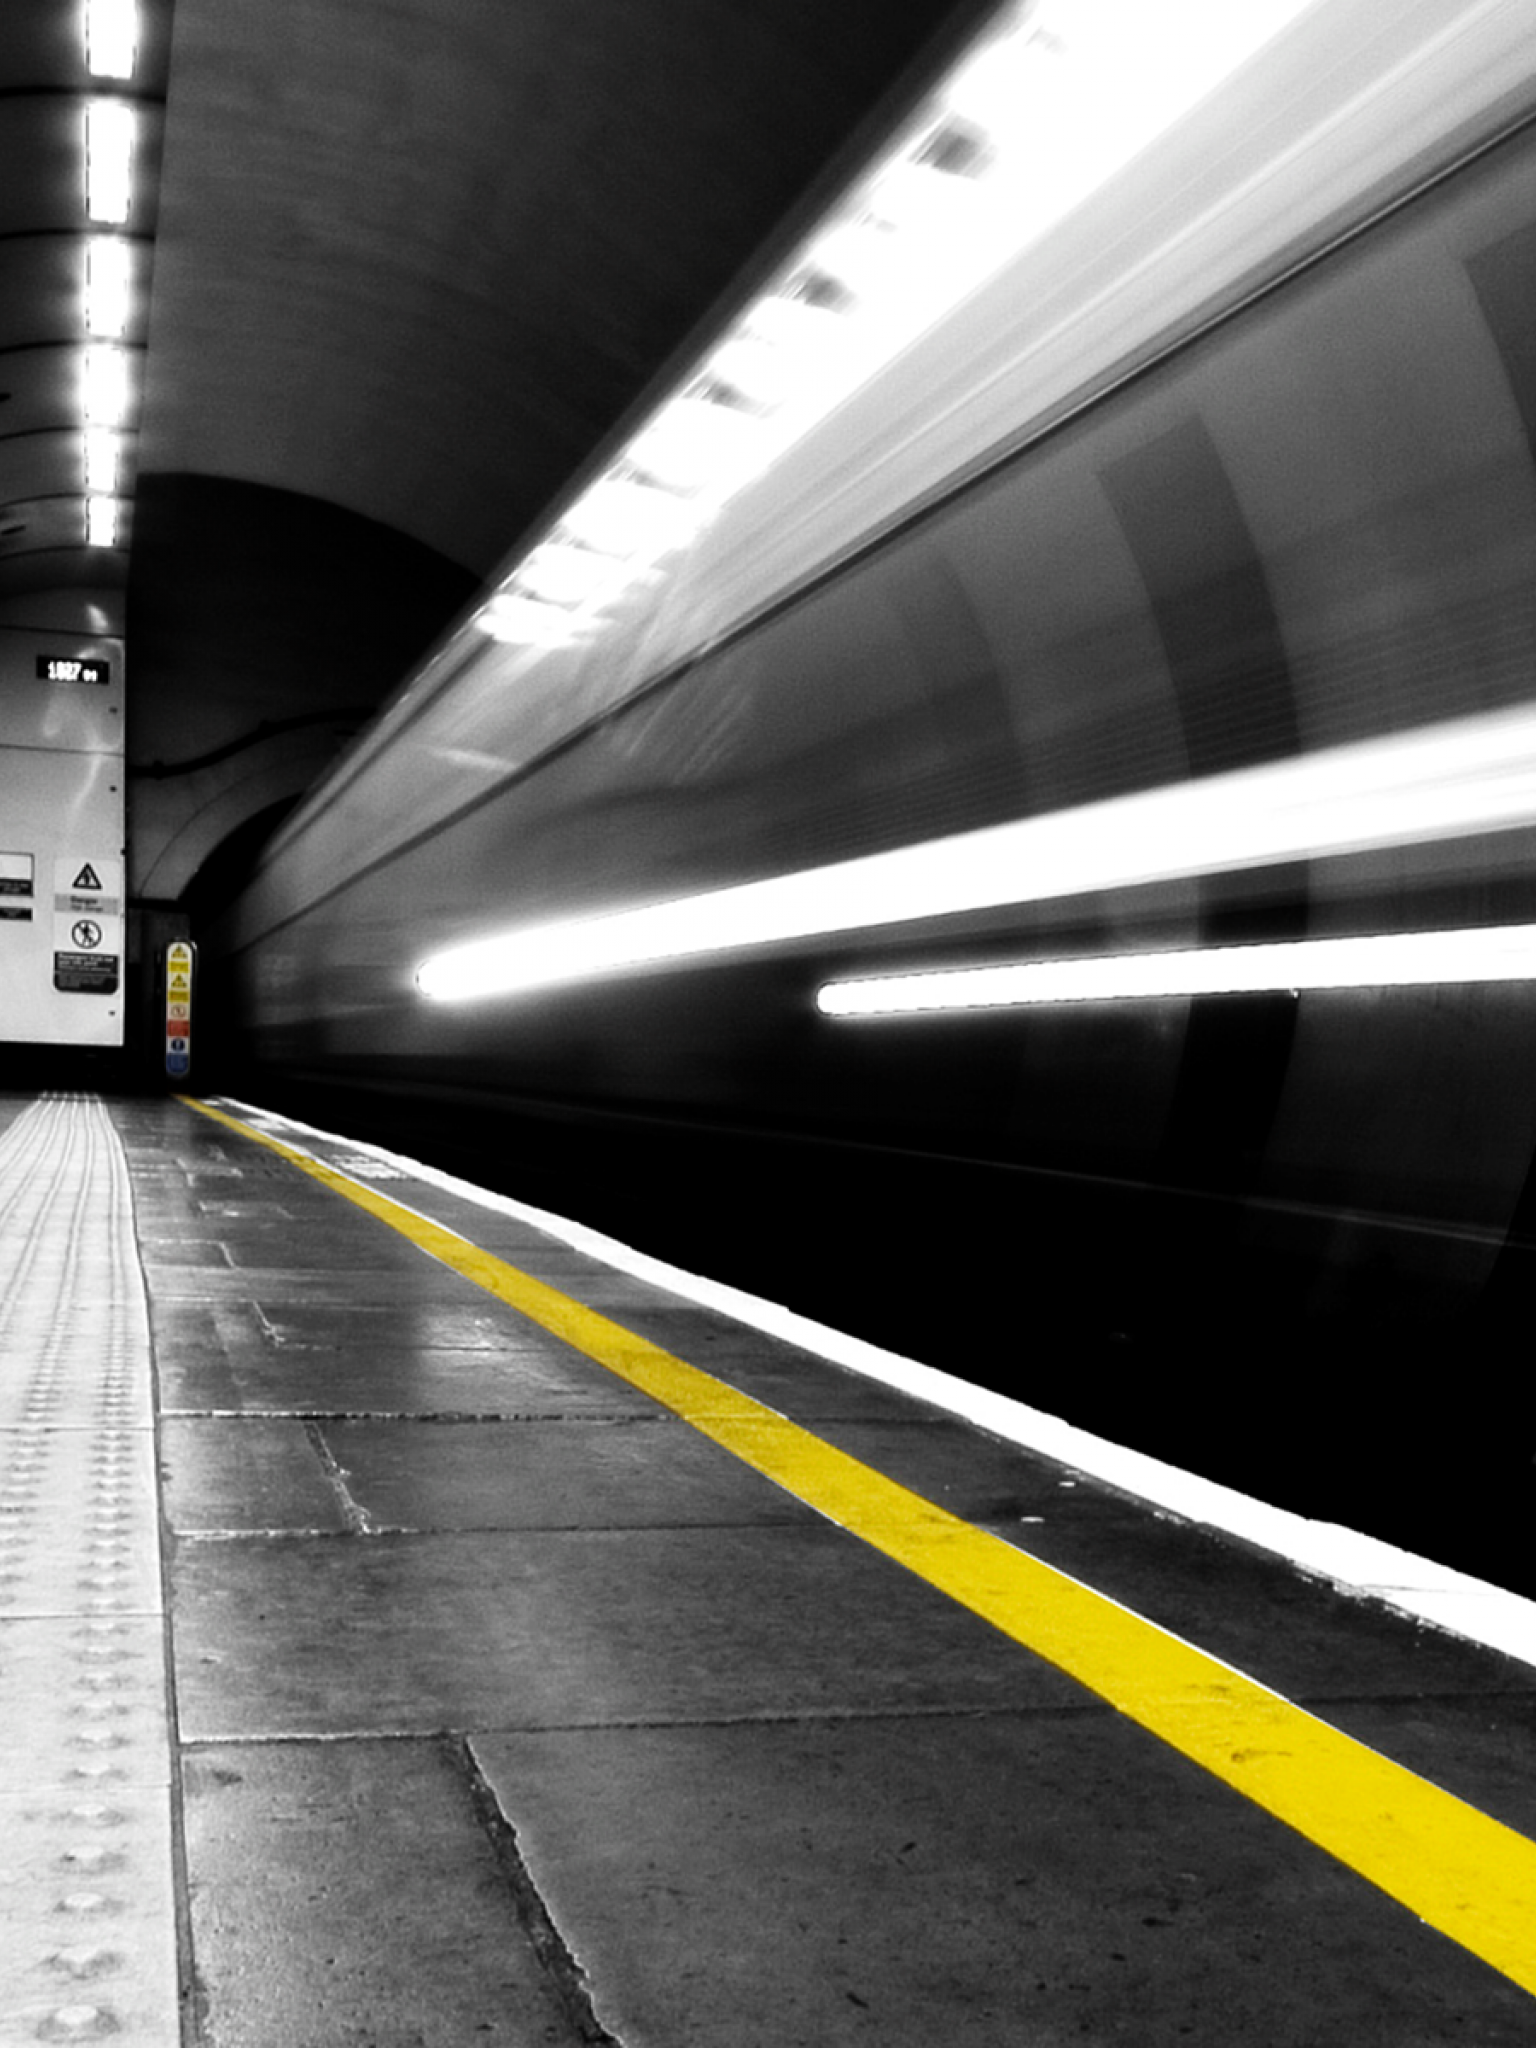 Включи станцию черную. Андеграунд. Желтая линия. Андеграунд фото. Серый фон метро.